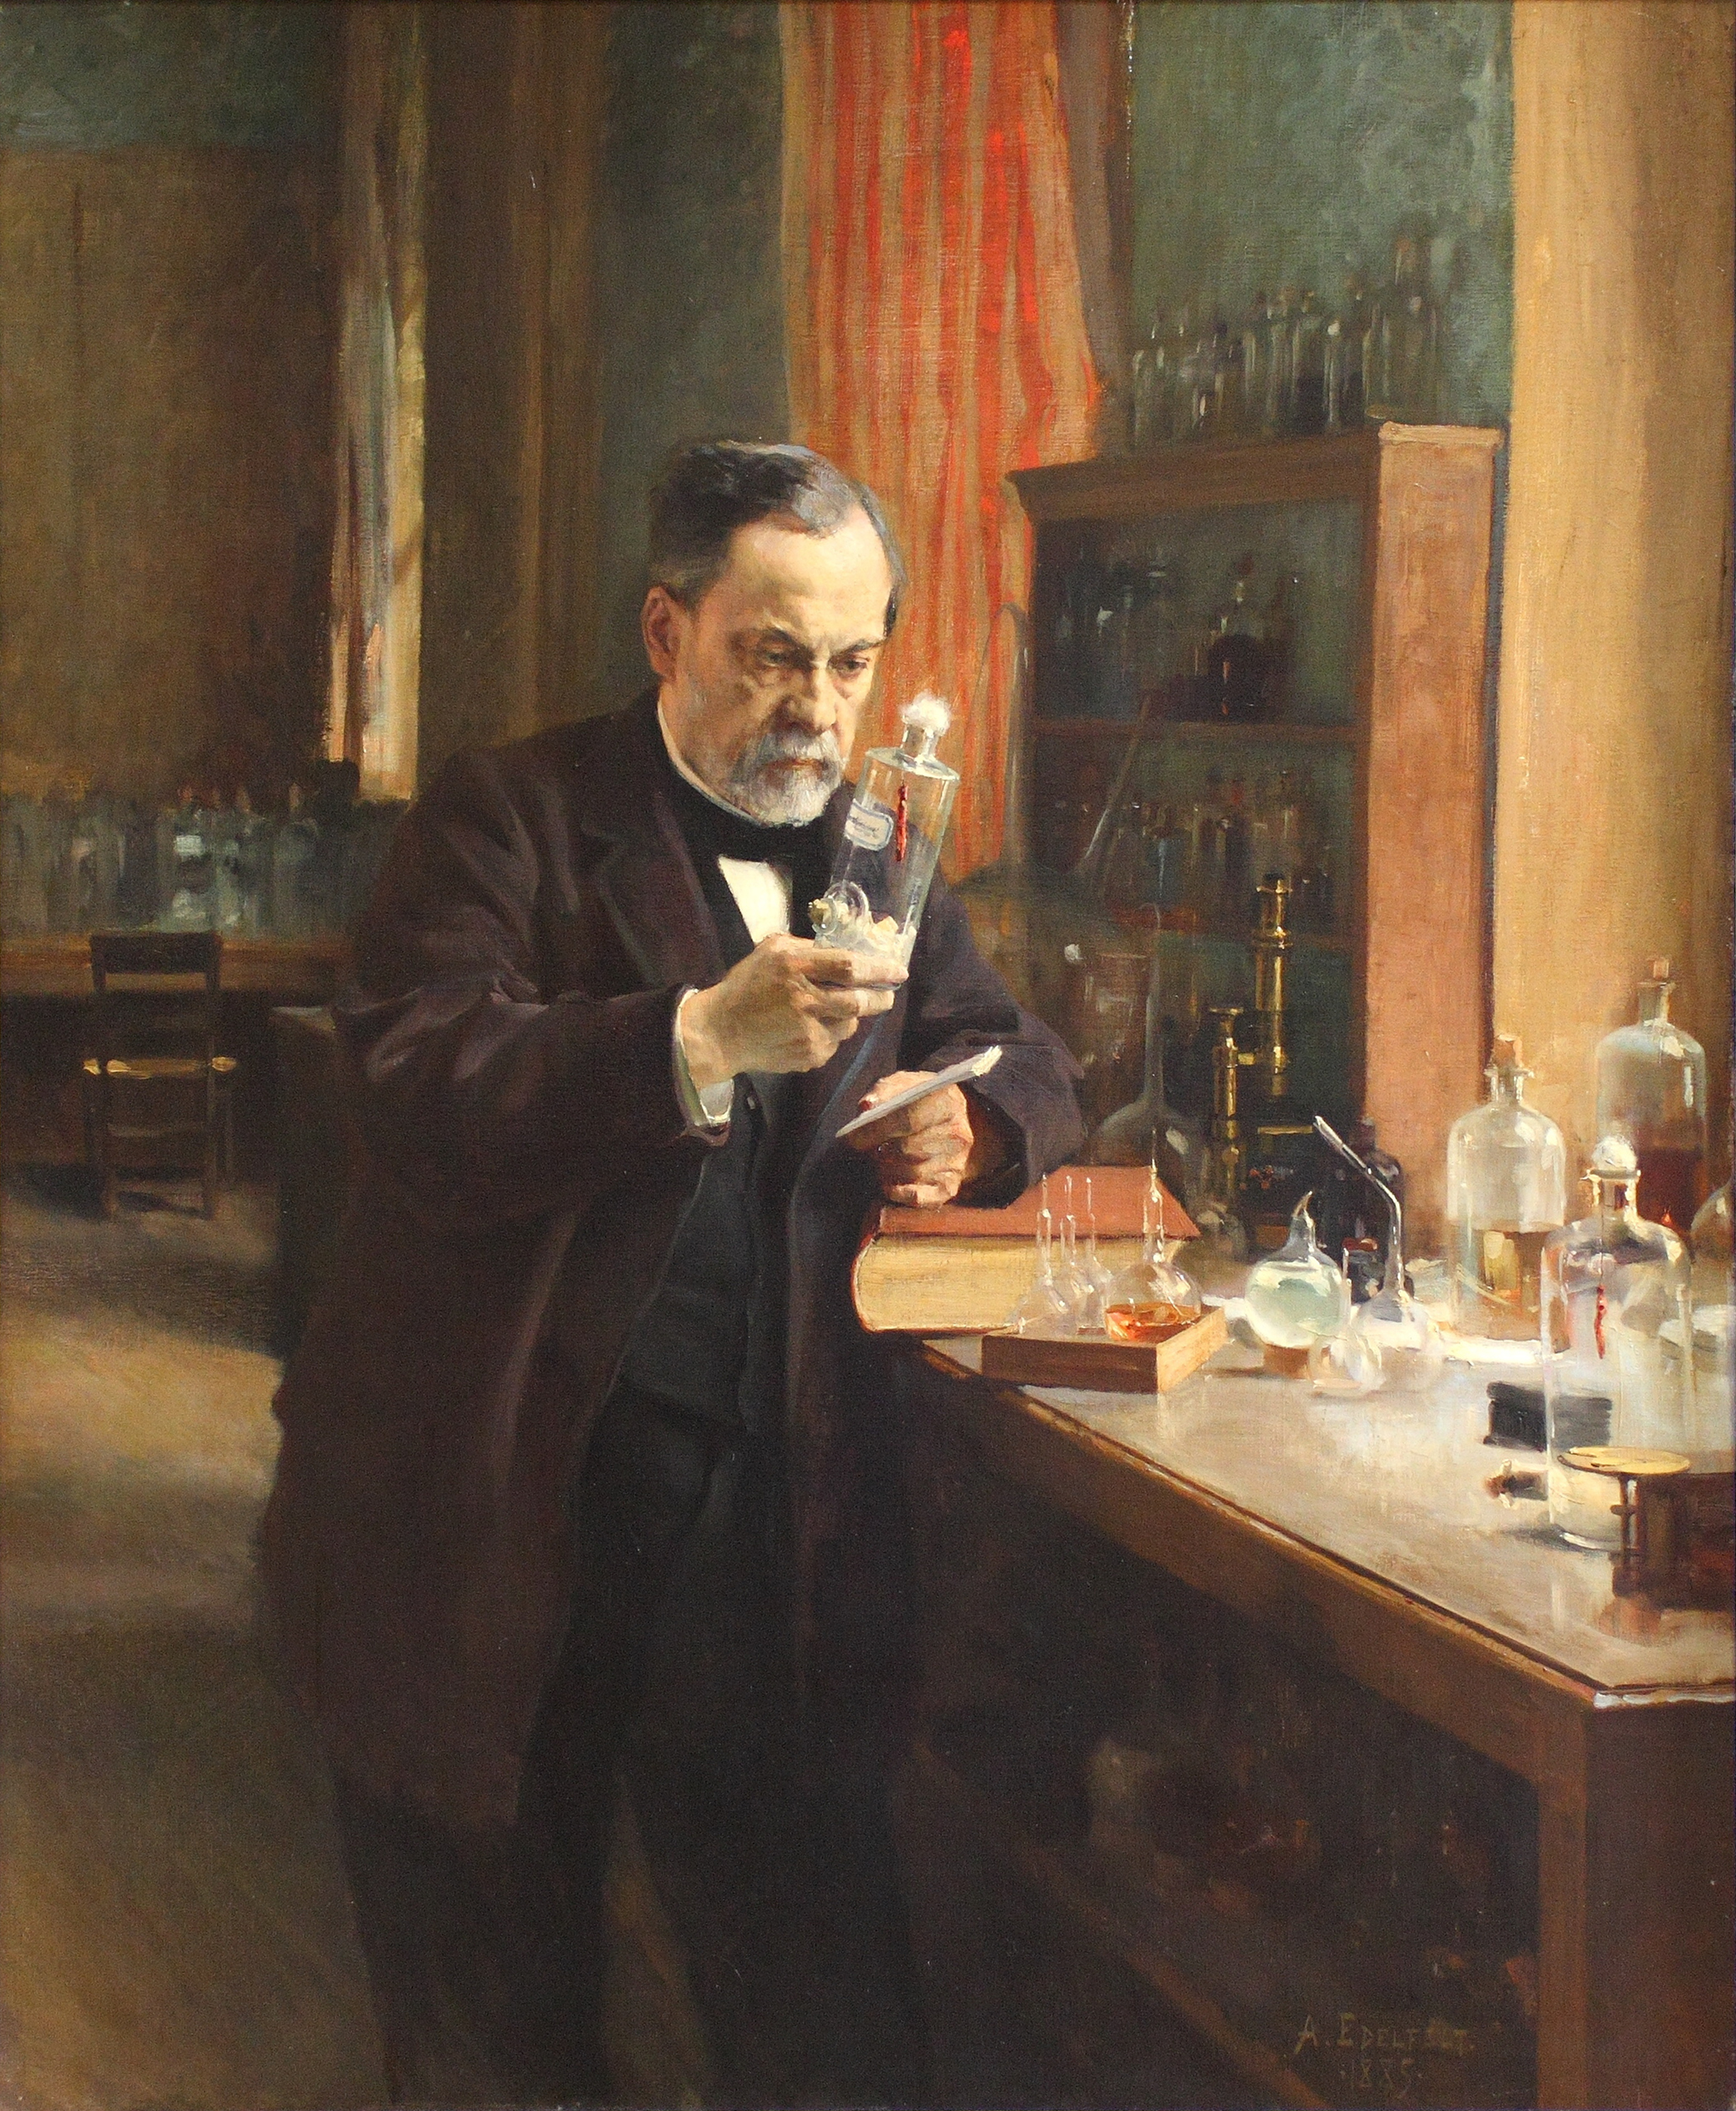 who was Louis Pasteur